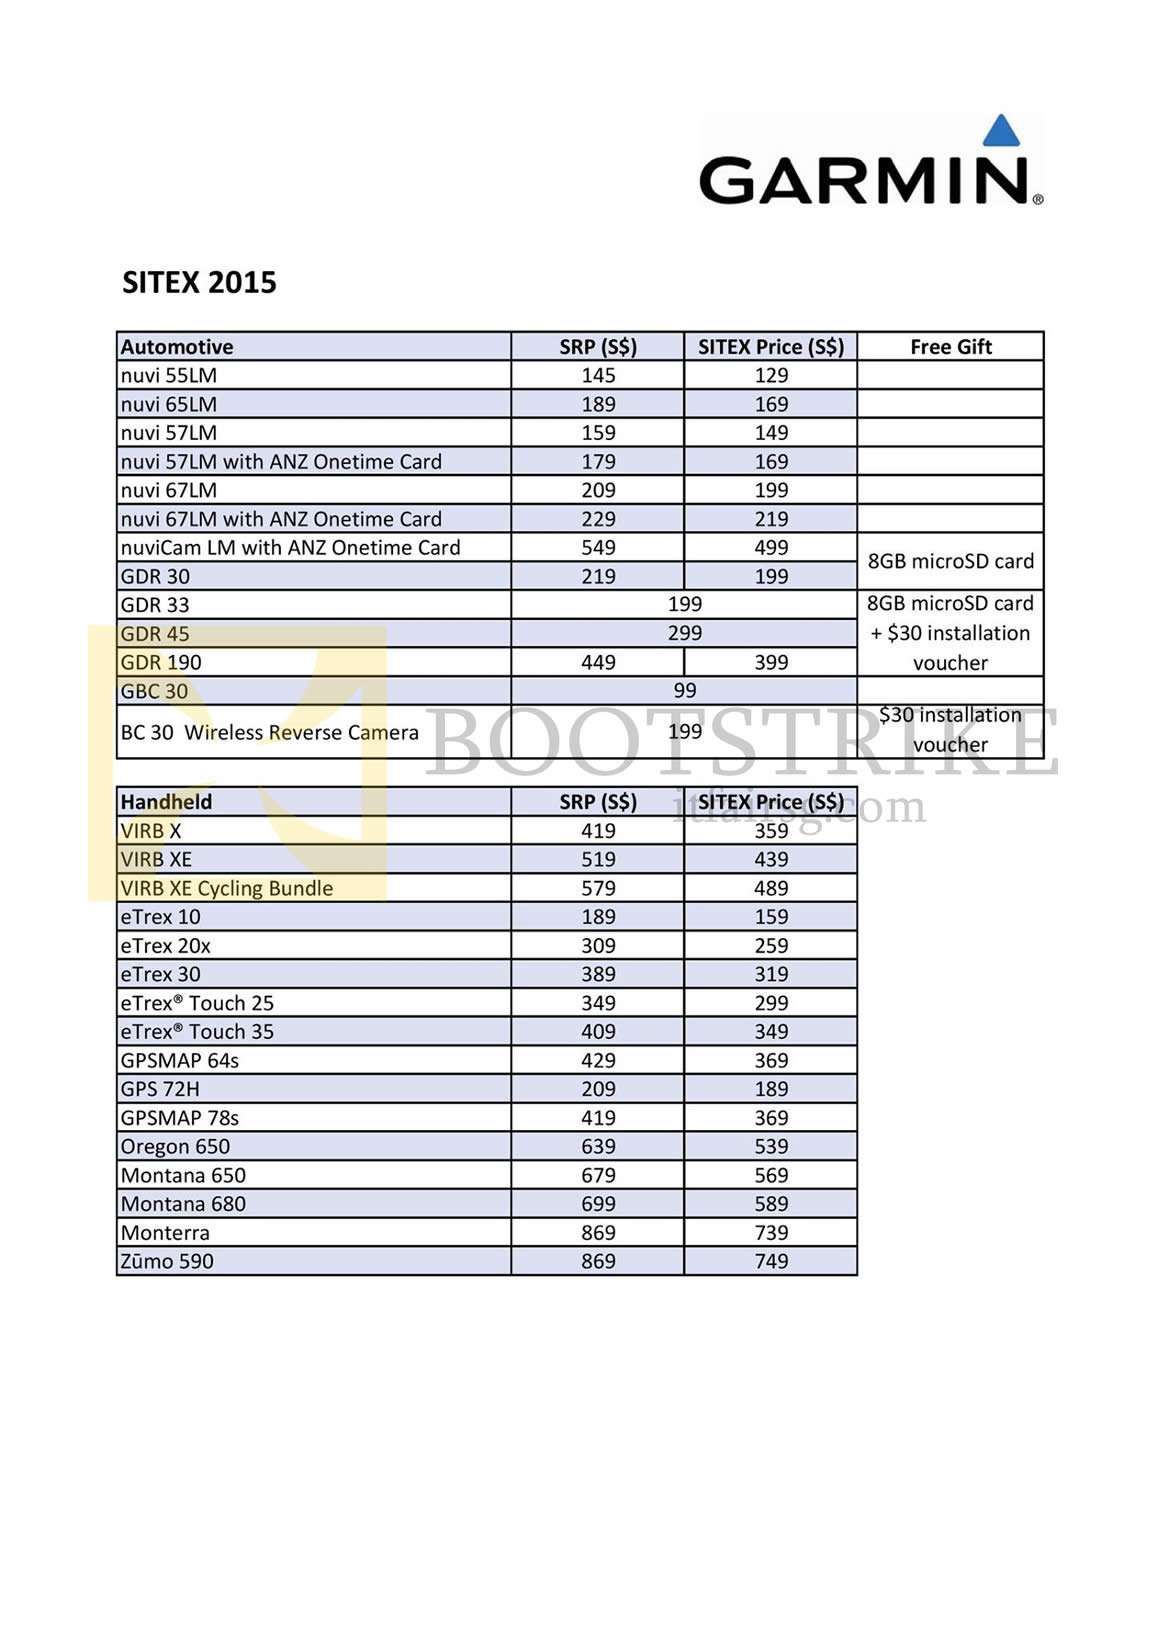 SITEX 2015 price list image brochure of Navicom Garmin Sitex And Retail Price Comparison List, Automotive, Handheld